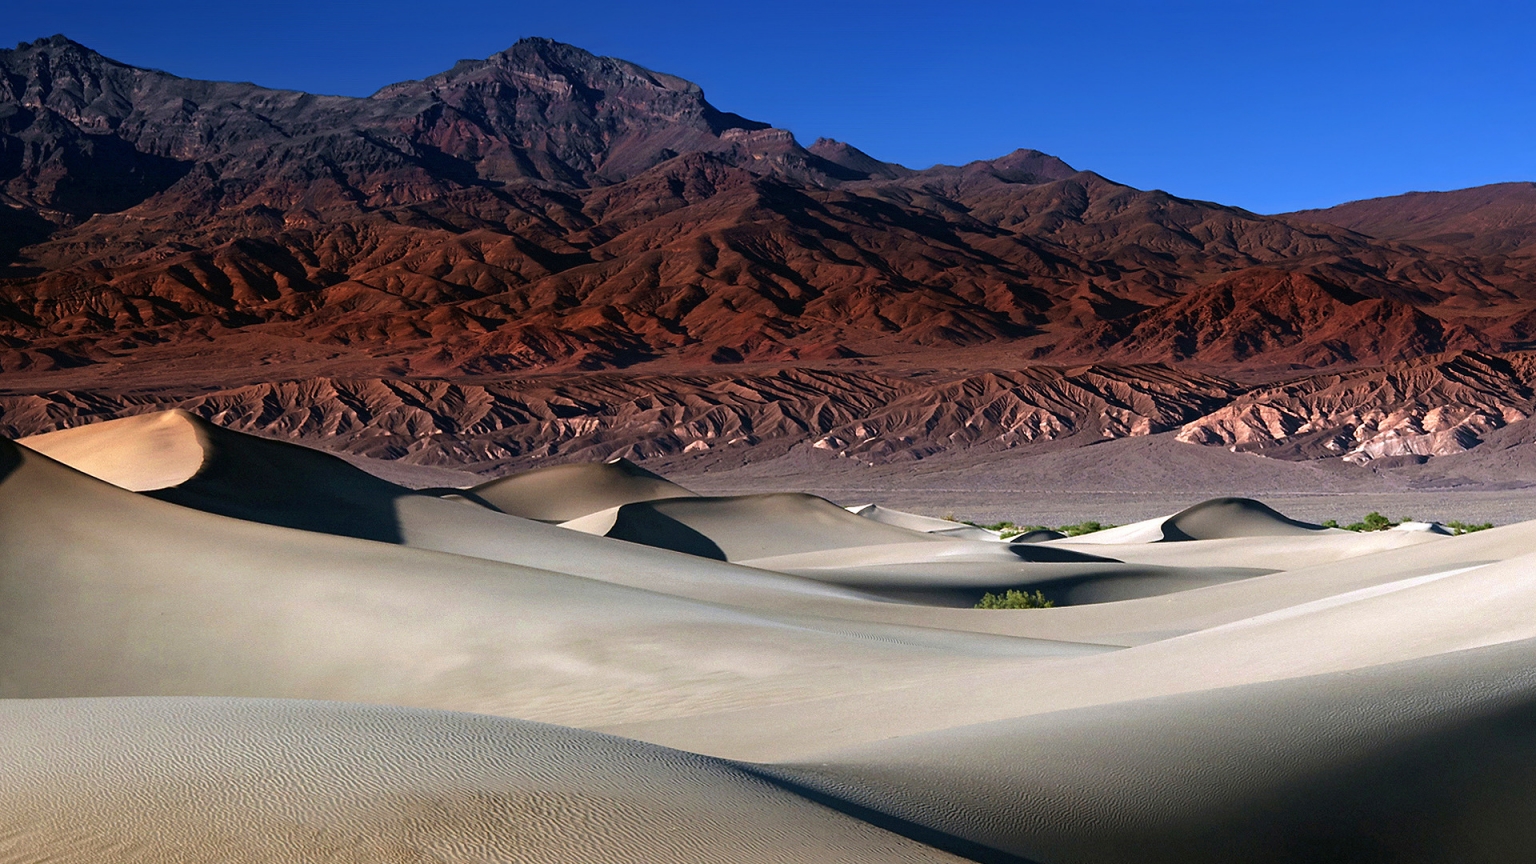 The Mesquite Dunes for 1536 x 864 HDTV resolution